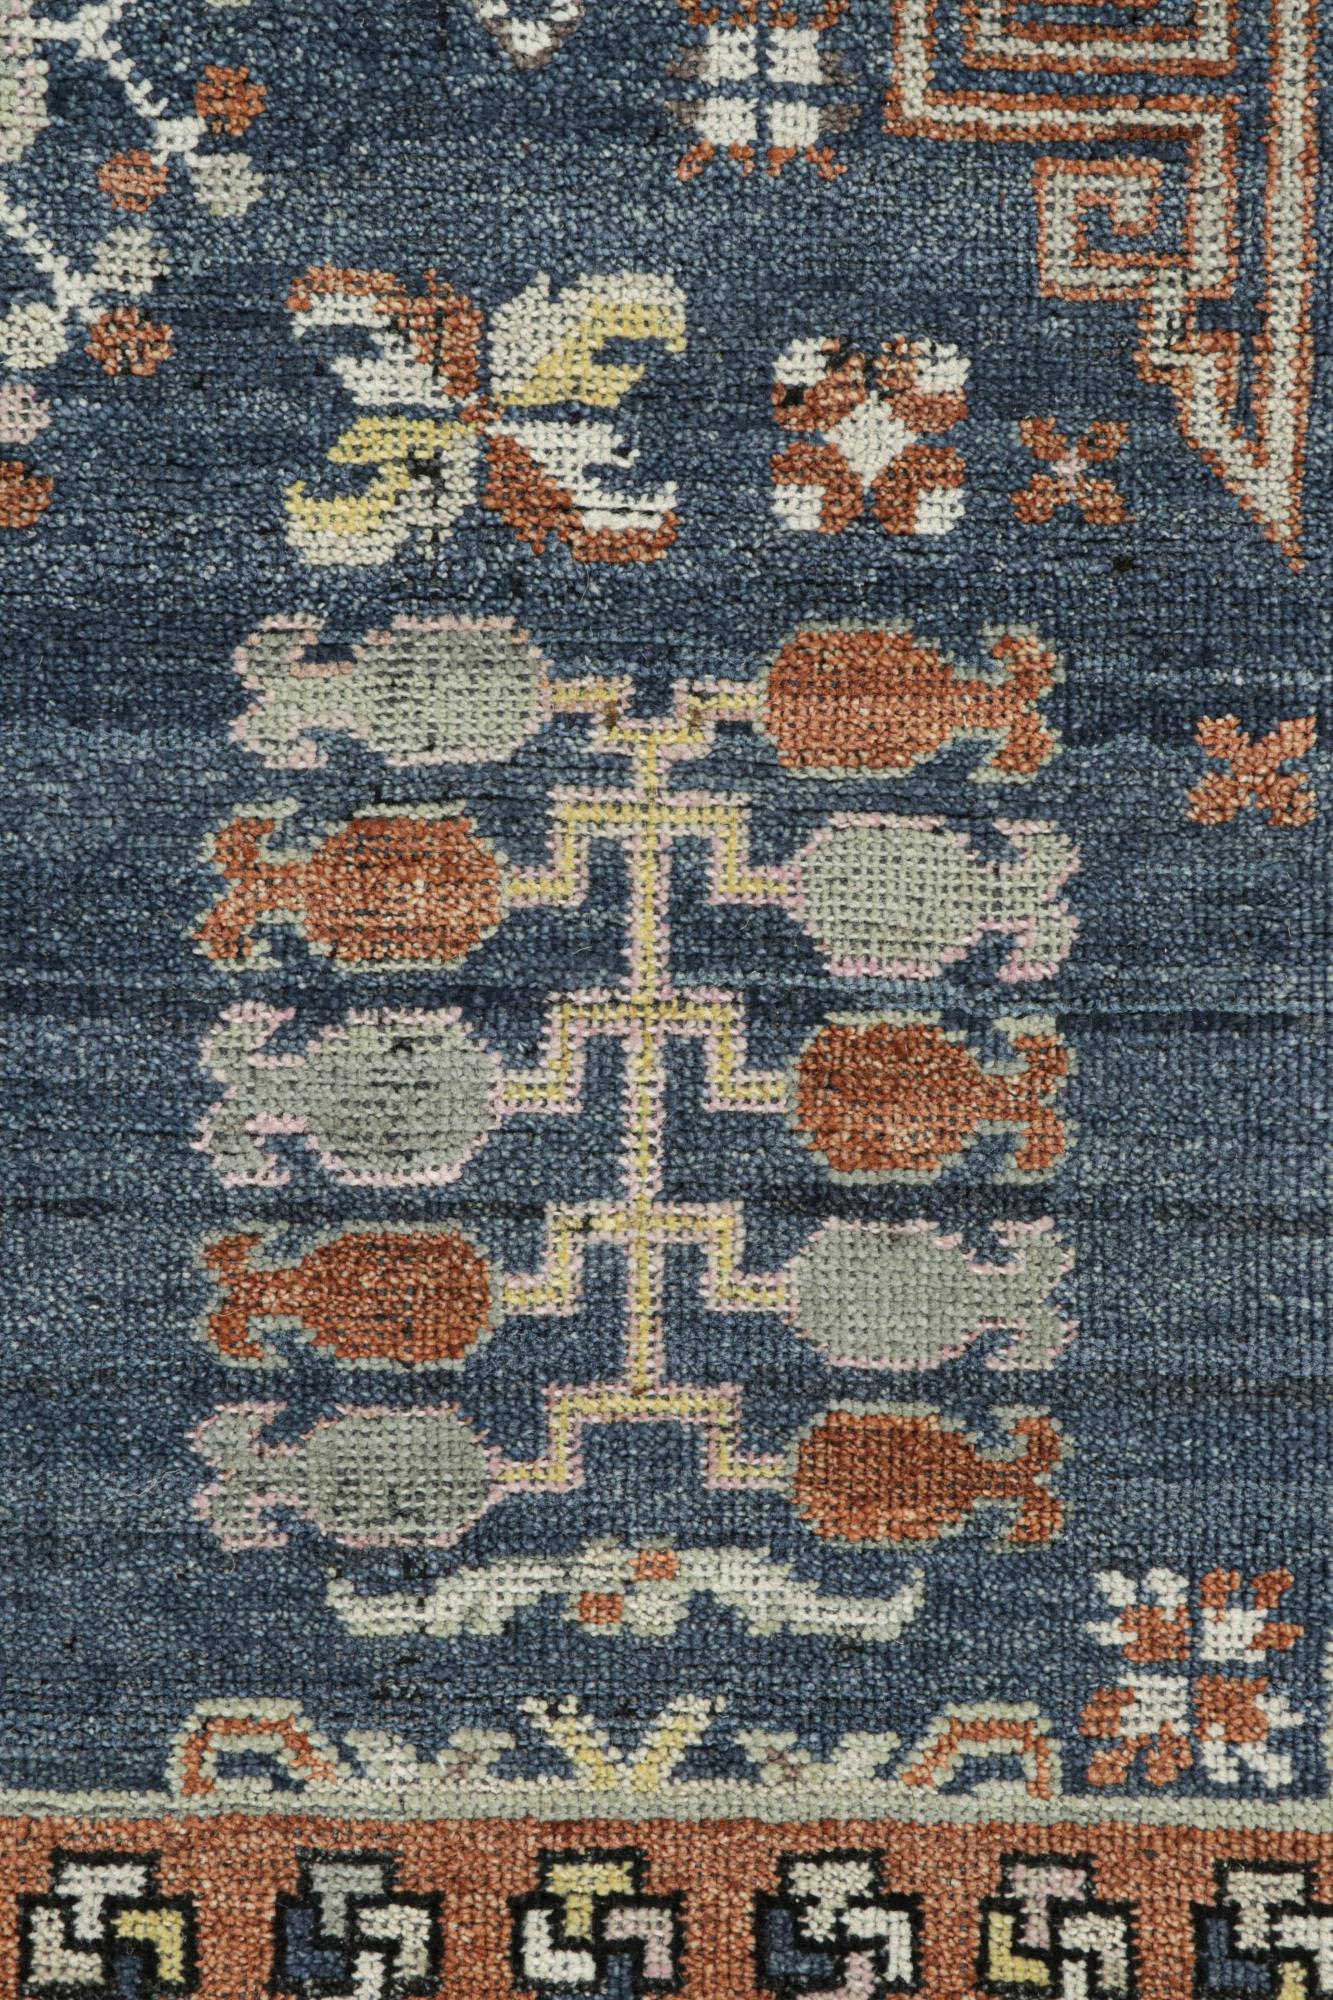 Tribal Rug & Kilim’s Khotan inspired rug in Brown & Blue Geometric Patterns For Sale